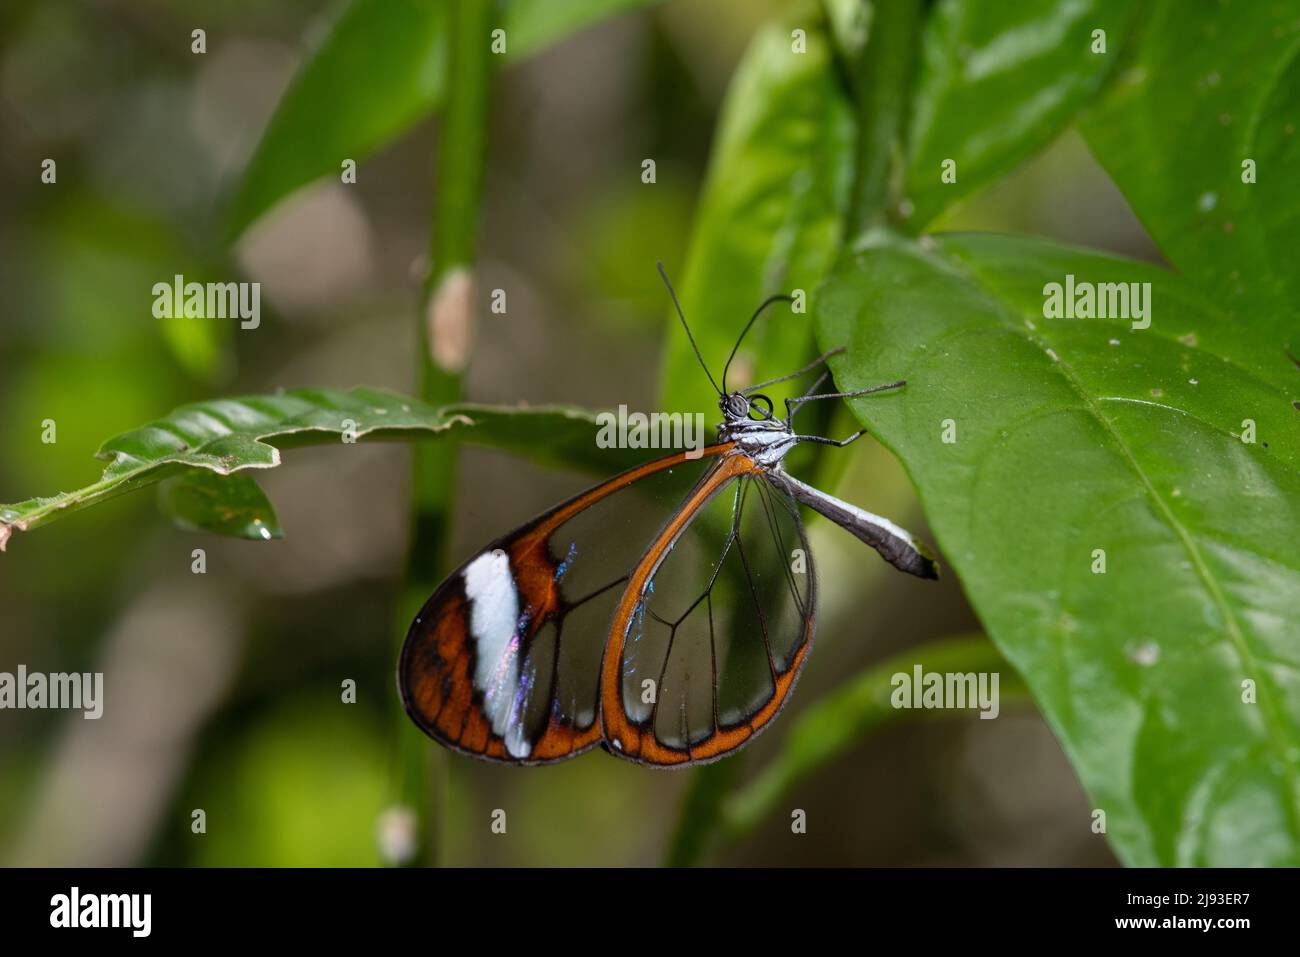 Glasswing butterfly sat on a green leaf. Stock Photo